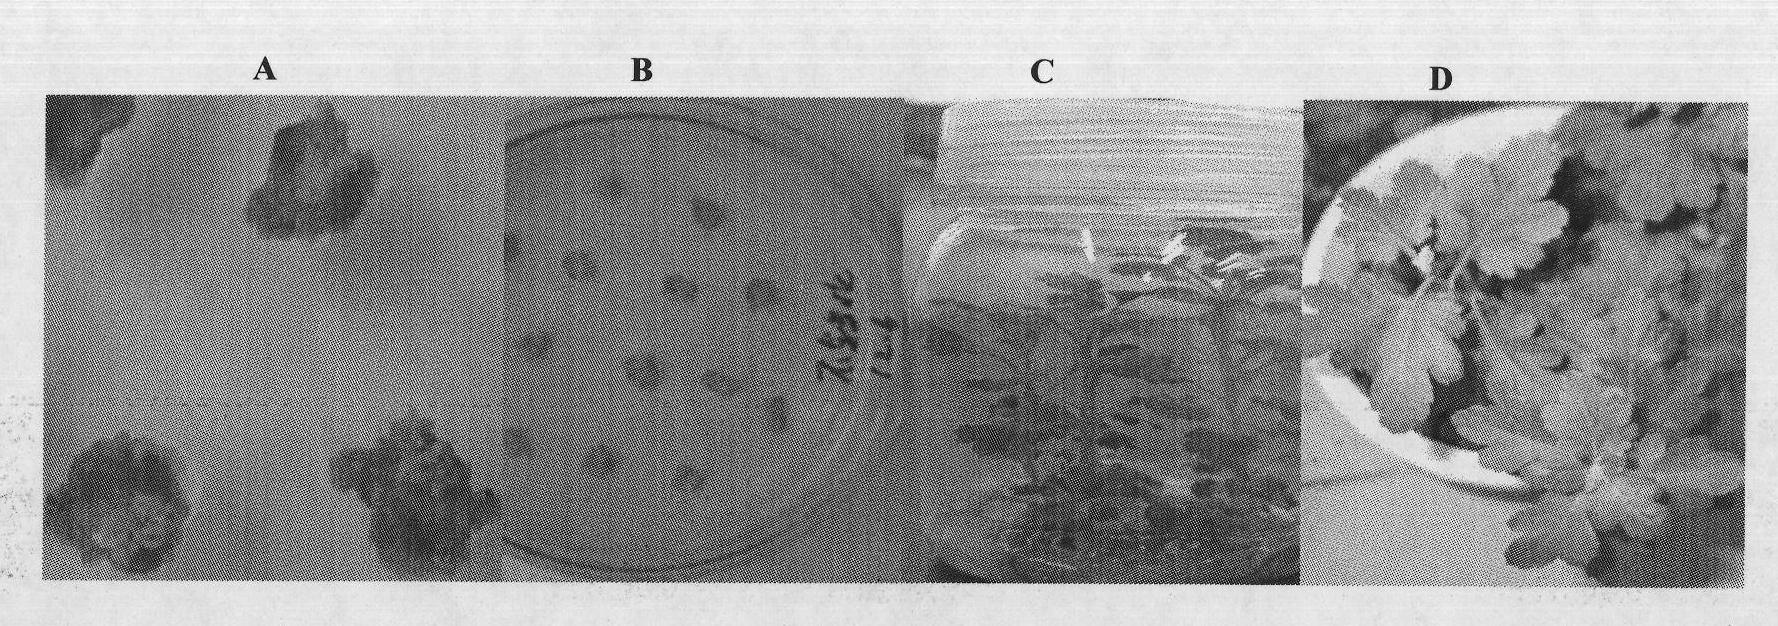 Method for enhancing aphis resistance of chrysanthemum by using transgenosis